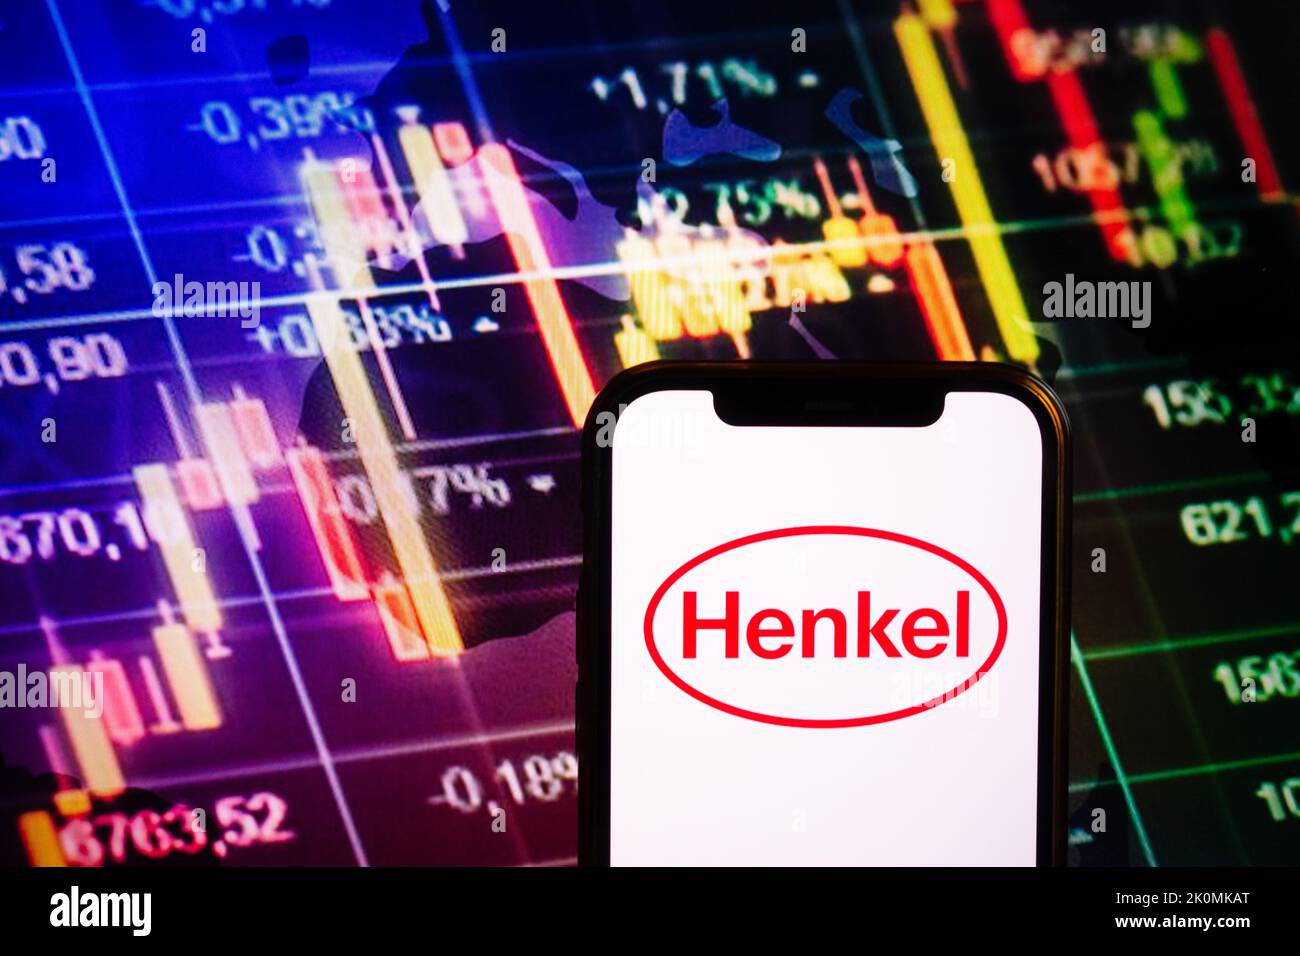 KONSKIE, POLAND - September 10, 2022: Smartphone displaying logo of Henkel company on stock exchange diagram background Stock Photo